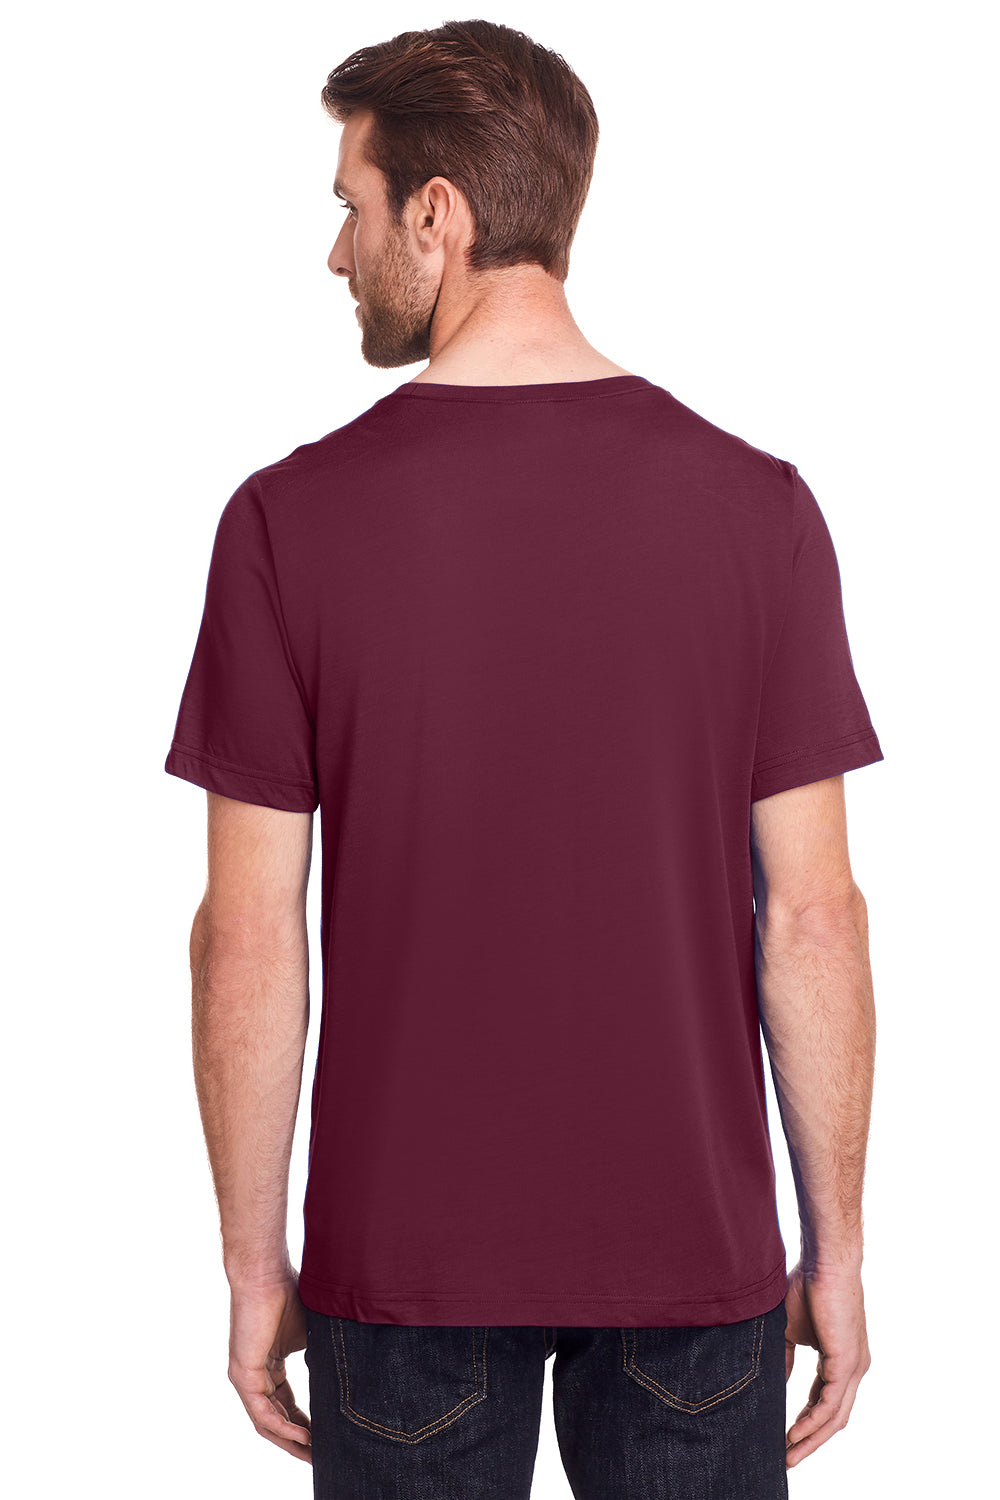 Core 365 CE111 Mens Fusion ChromaSoft Performance Moisture Wicking Short Sleeve Crewneck T-Shirt Burgundy Back